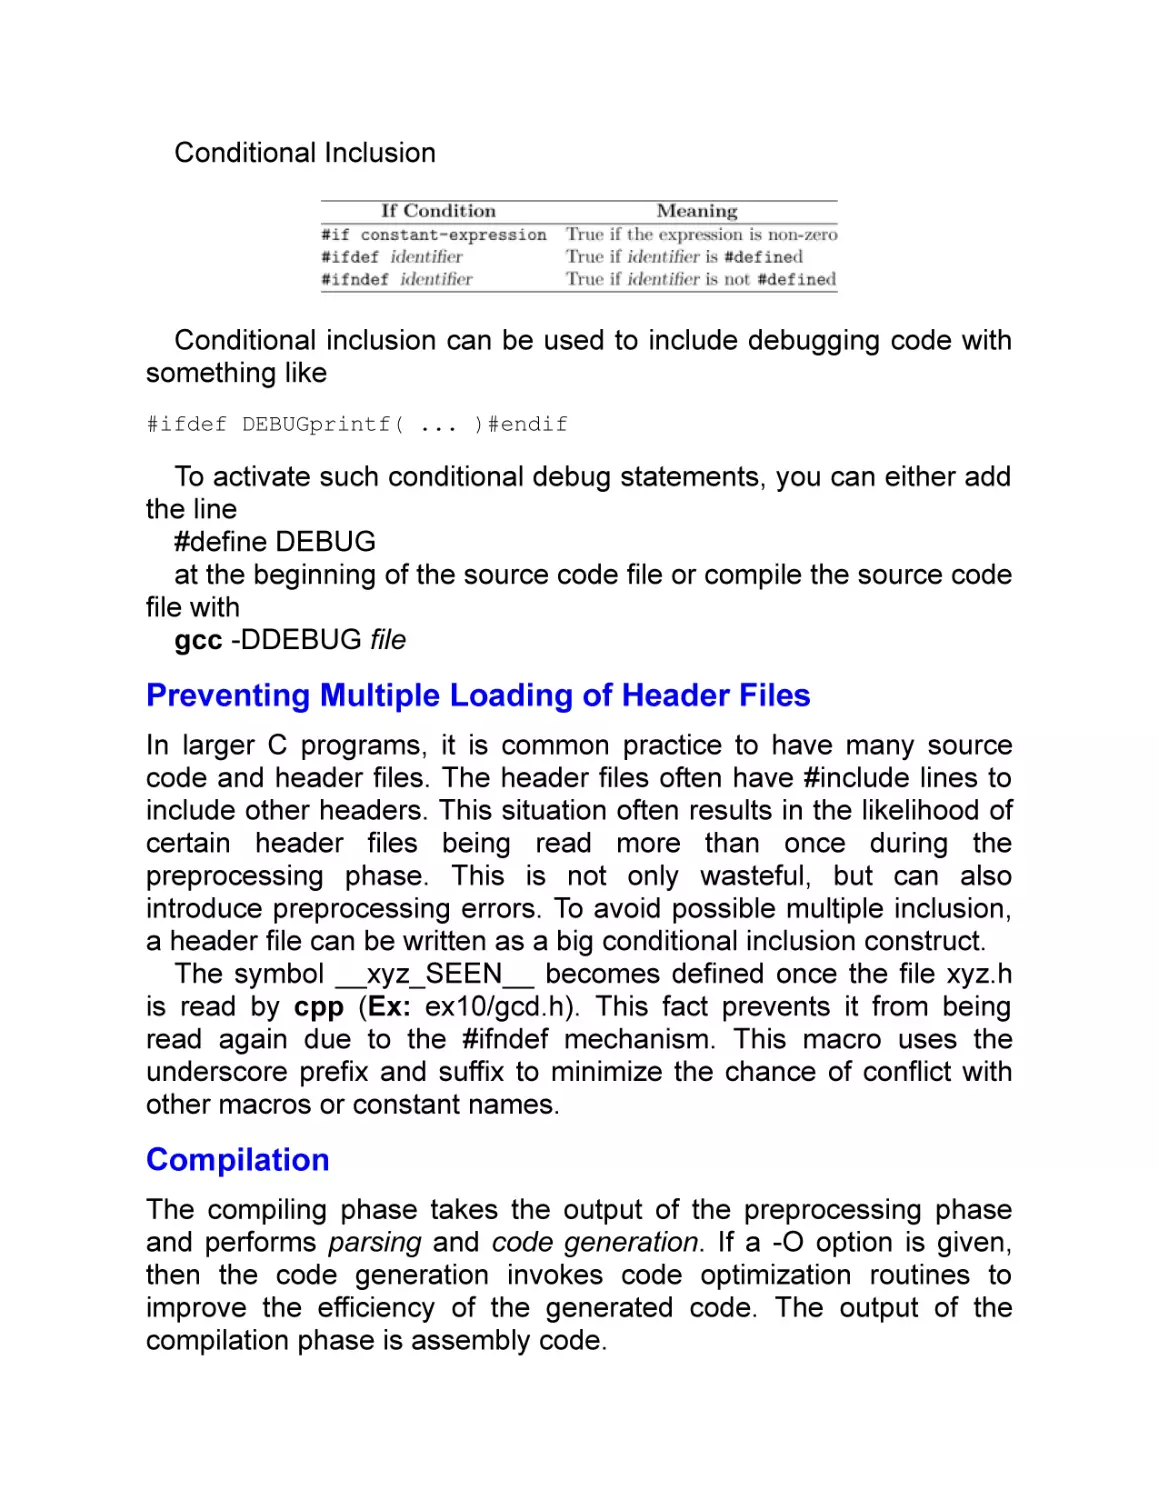 Preventing Multiple Loading of Header Files
Compilation